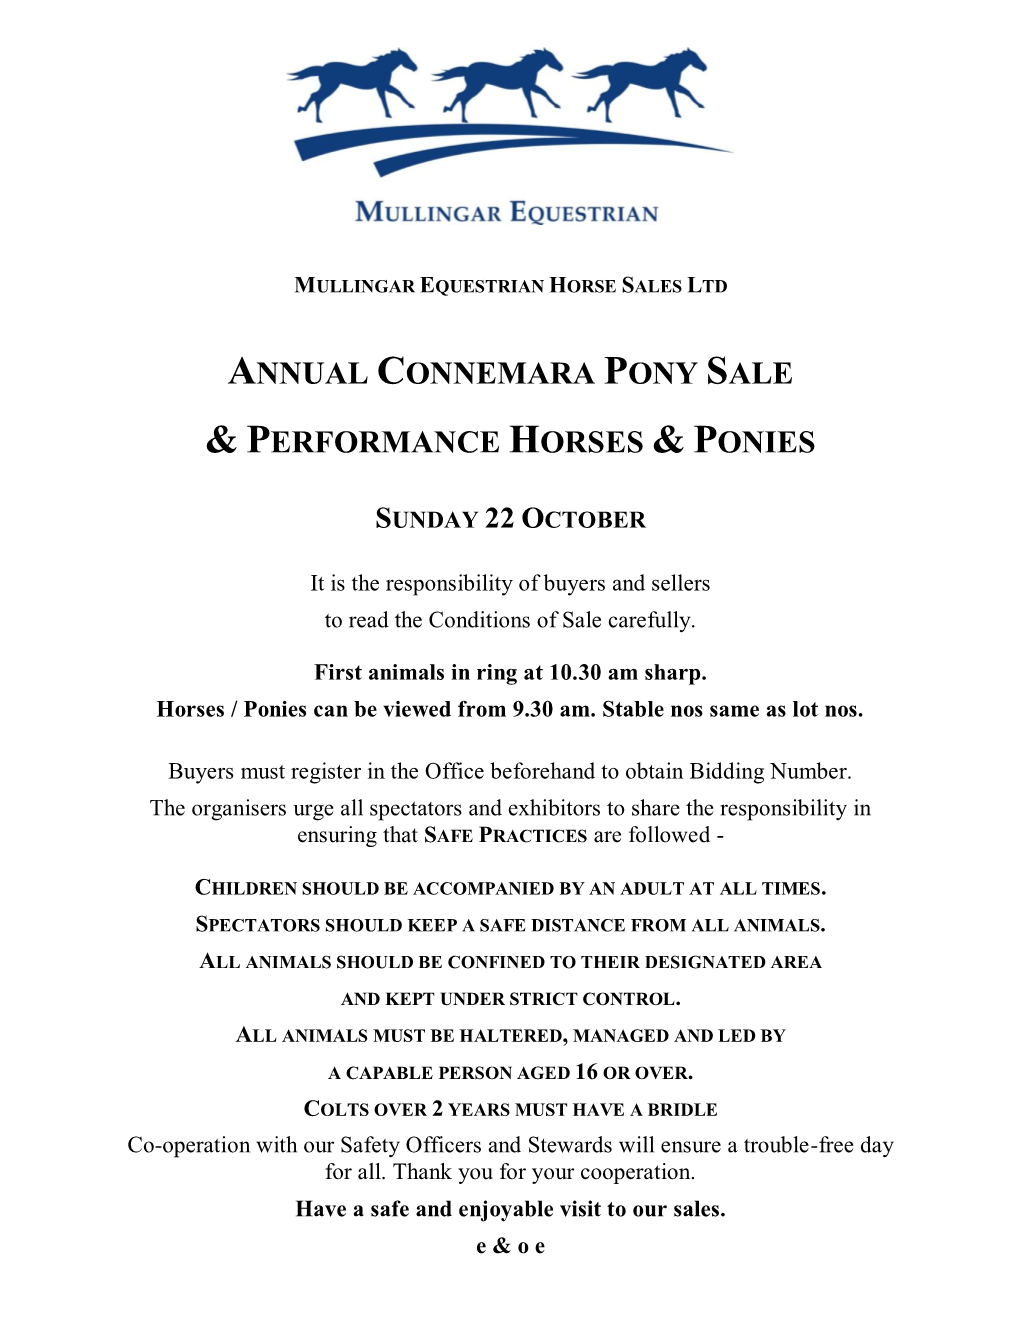 Annual Connemara Pony Sale & Performance Horses